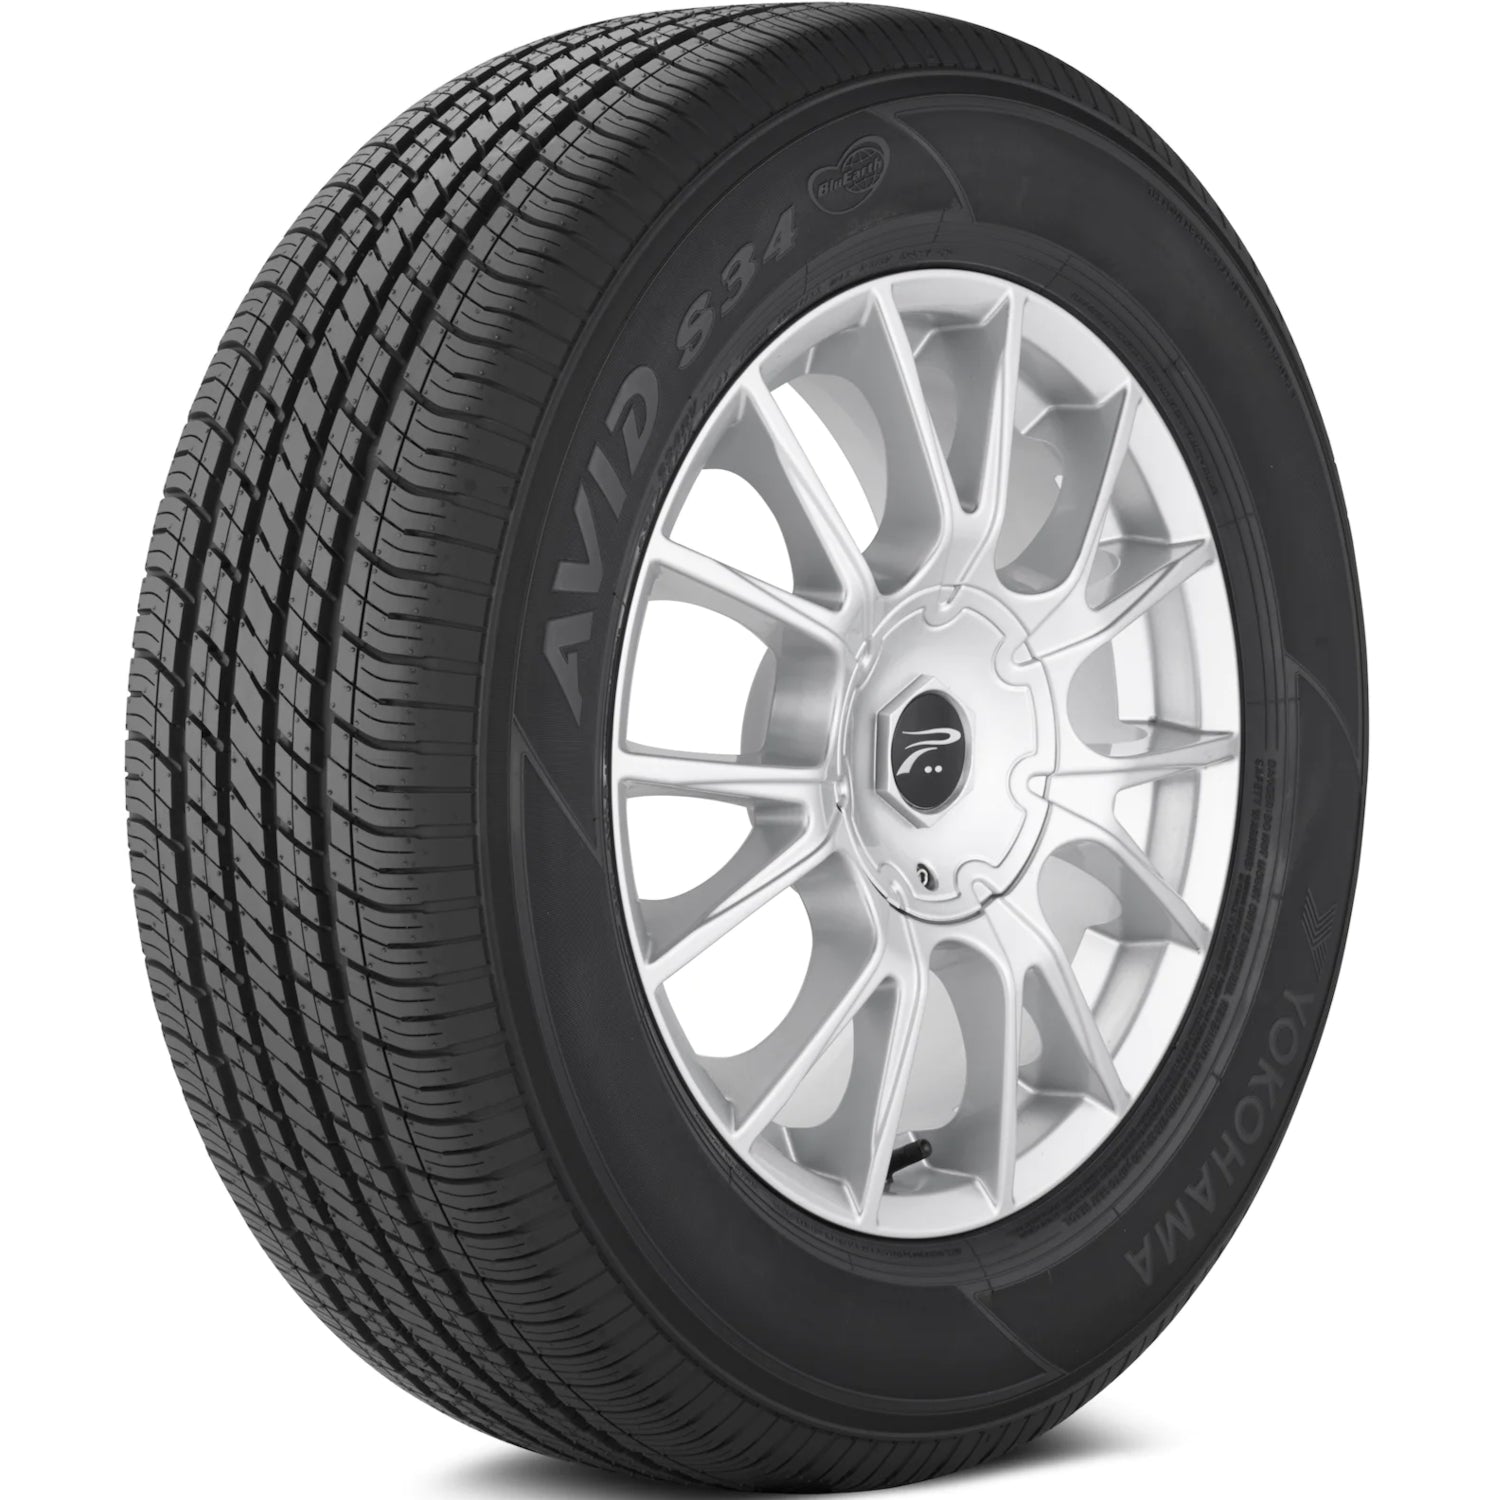 YOKOHAMA AVID S34RV 235/65R17 (29.1X9.3R 17) Tires